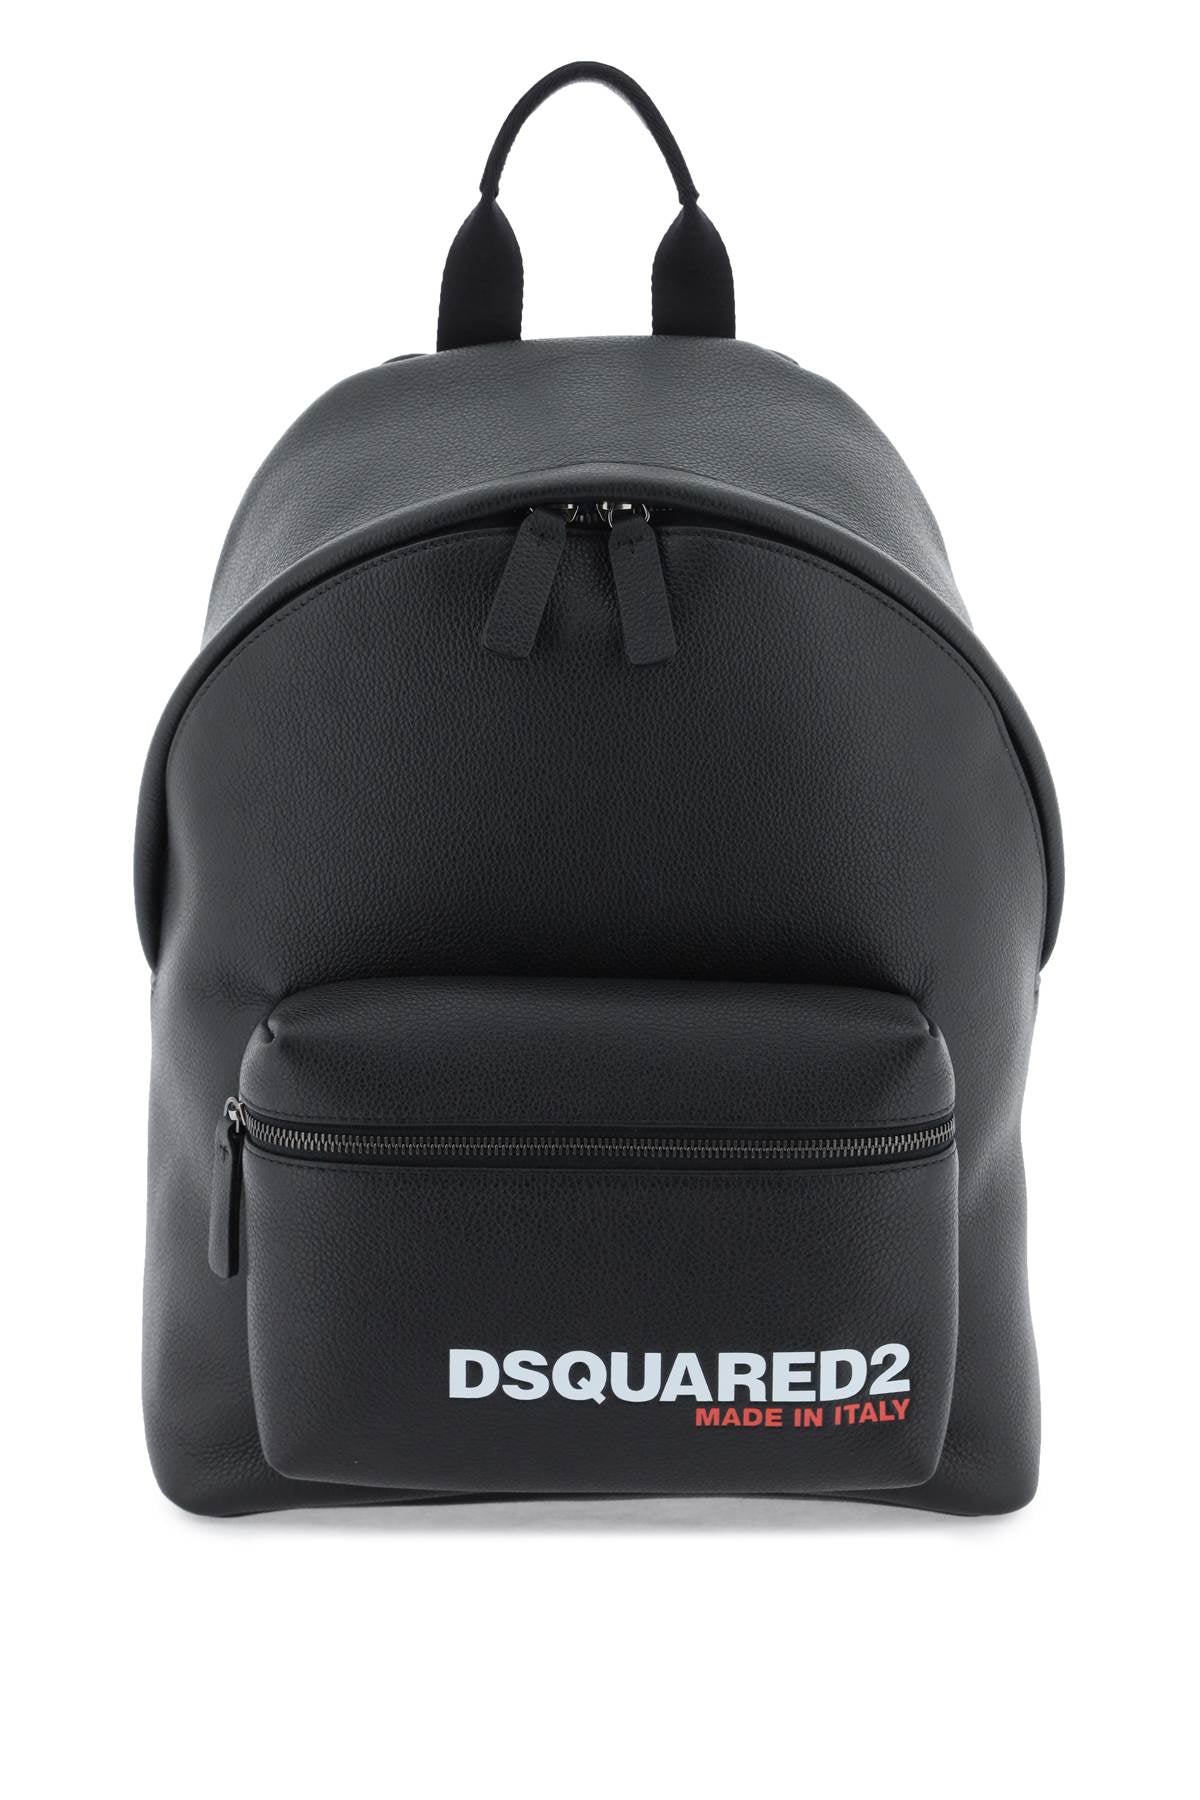 Dsquared2 bob backpack-0